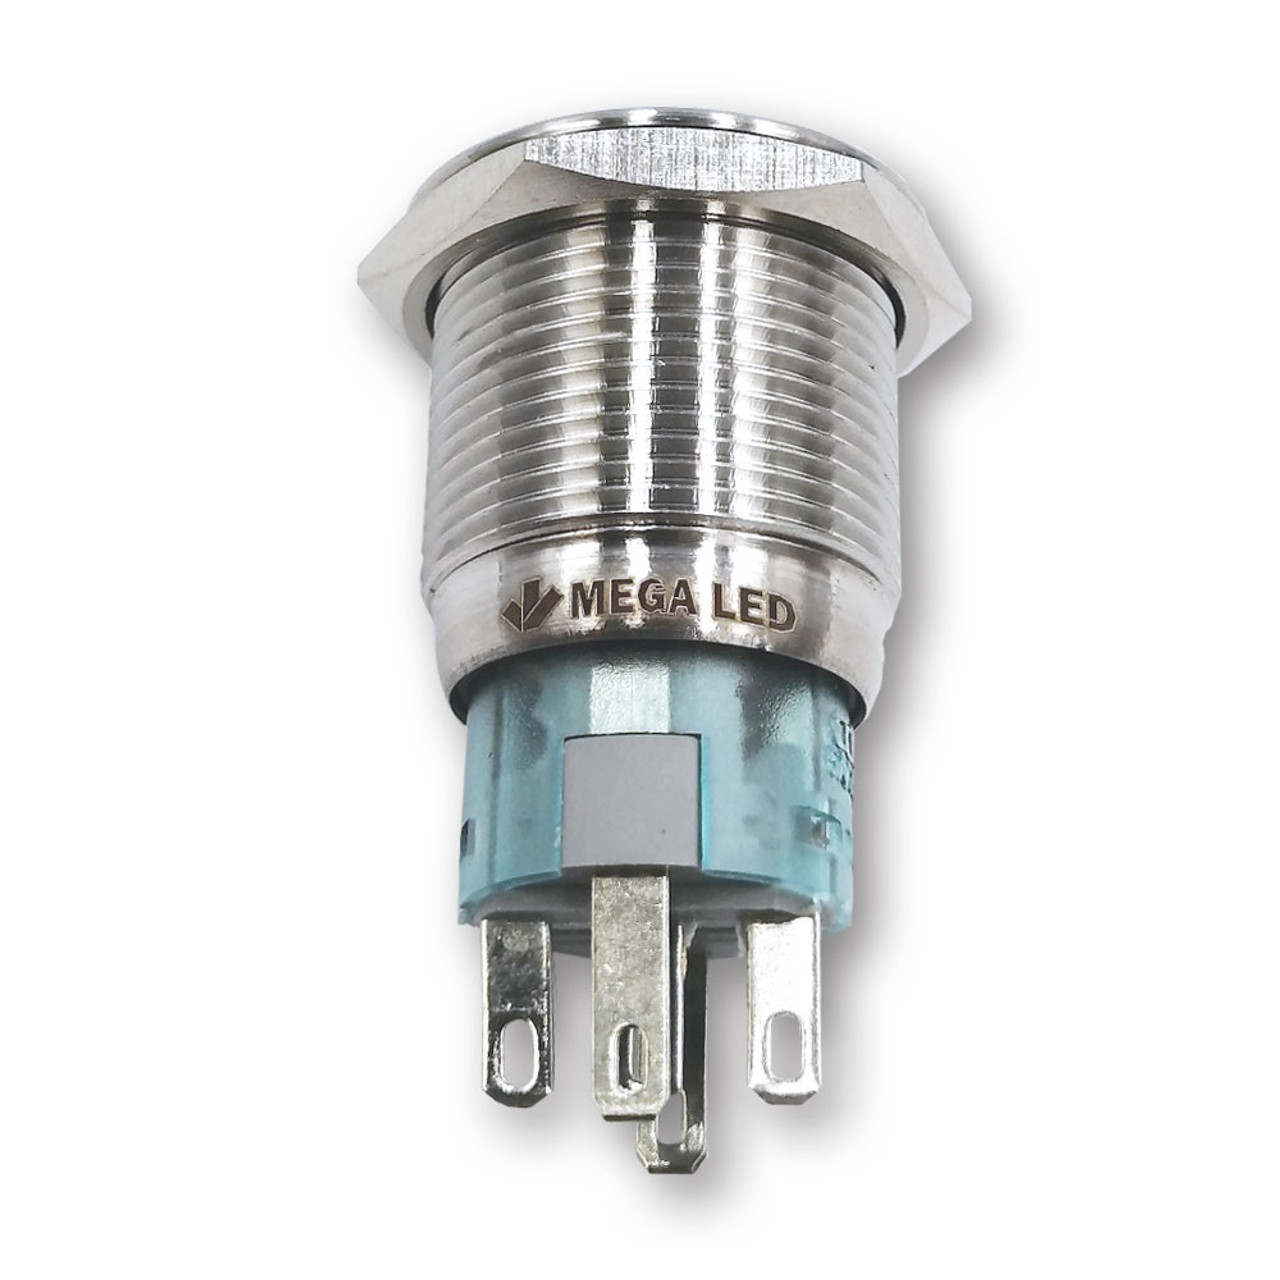 Mega LED - Push Button - Waterproof IP67, Stainless Steel, Latching Illuminated, 24V, Blue, Green LED (32350-G24L) - Apollo Lighting